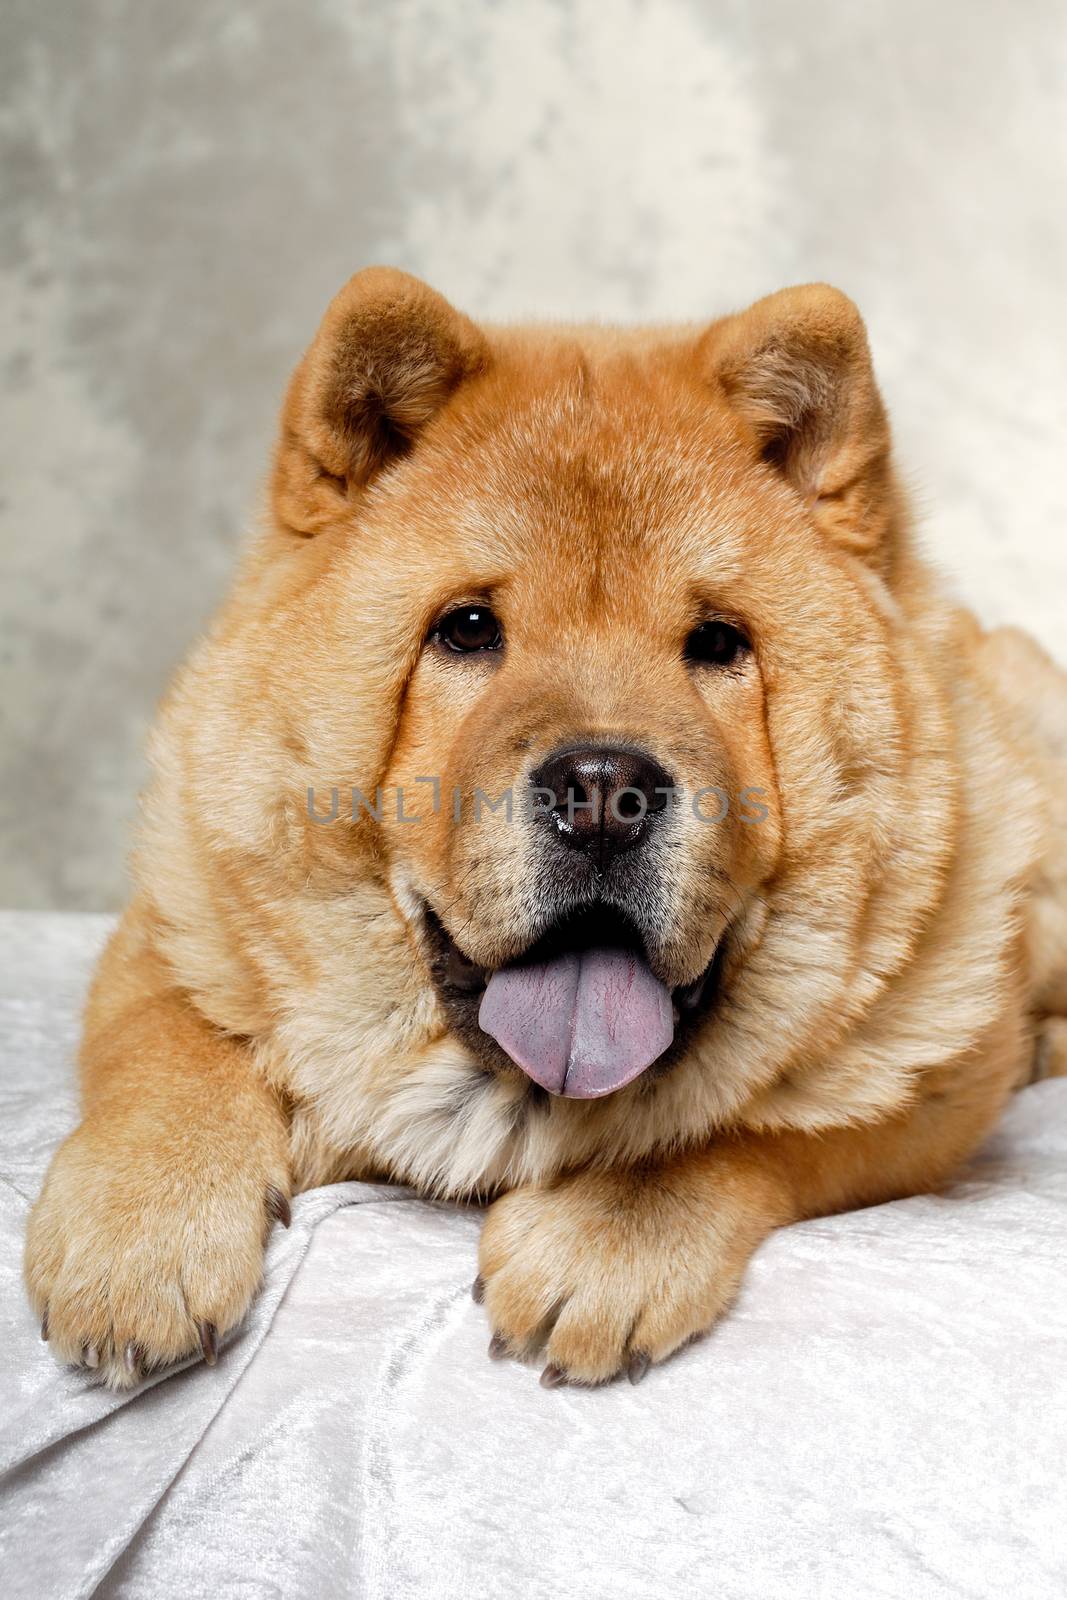 Chow dog resting by cfoto